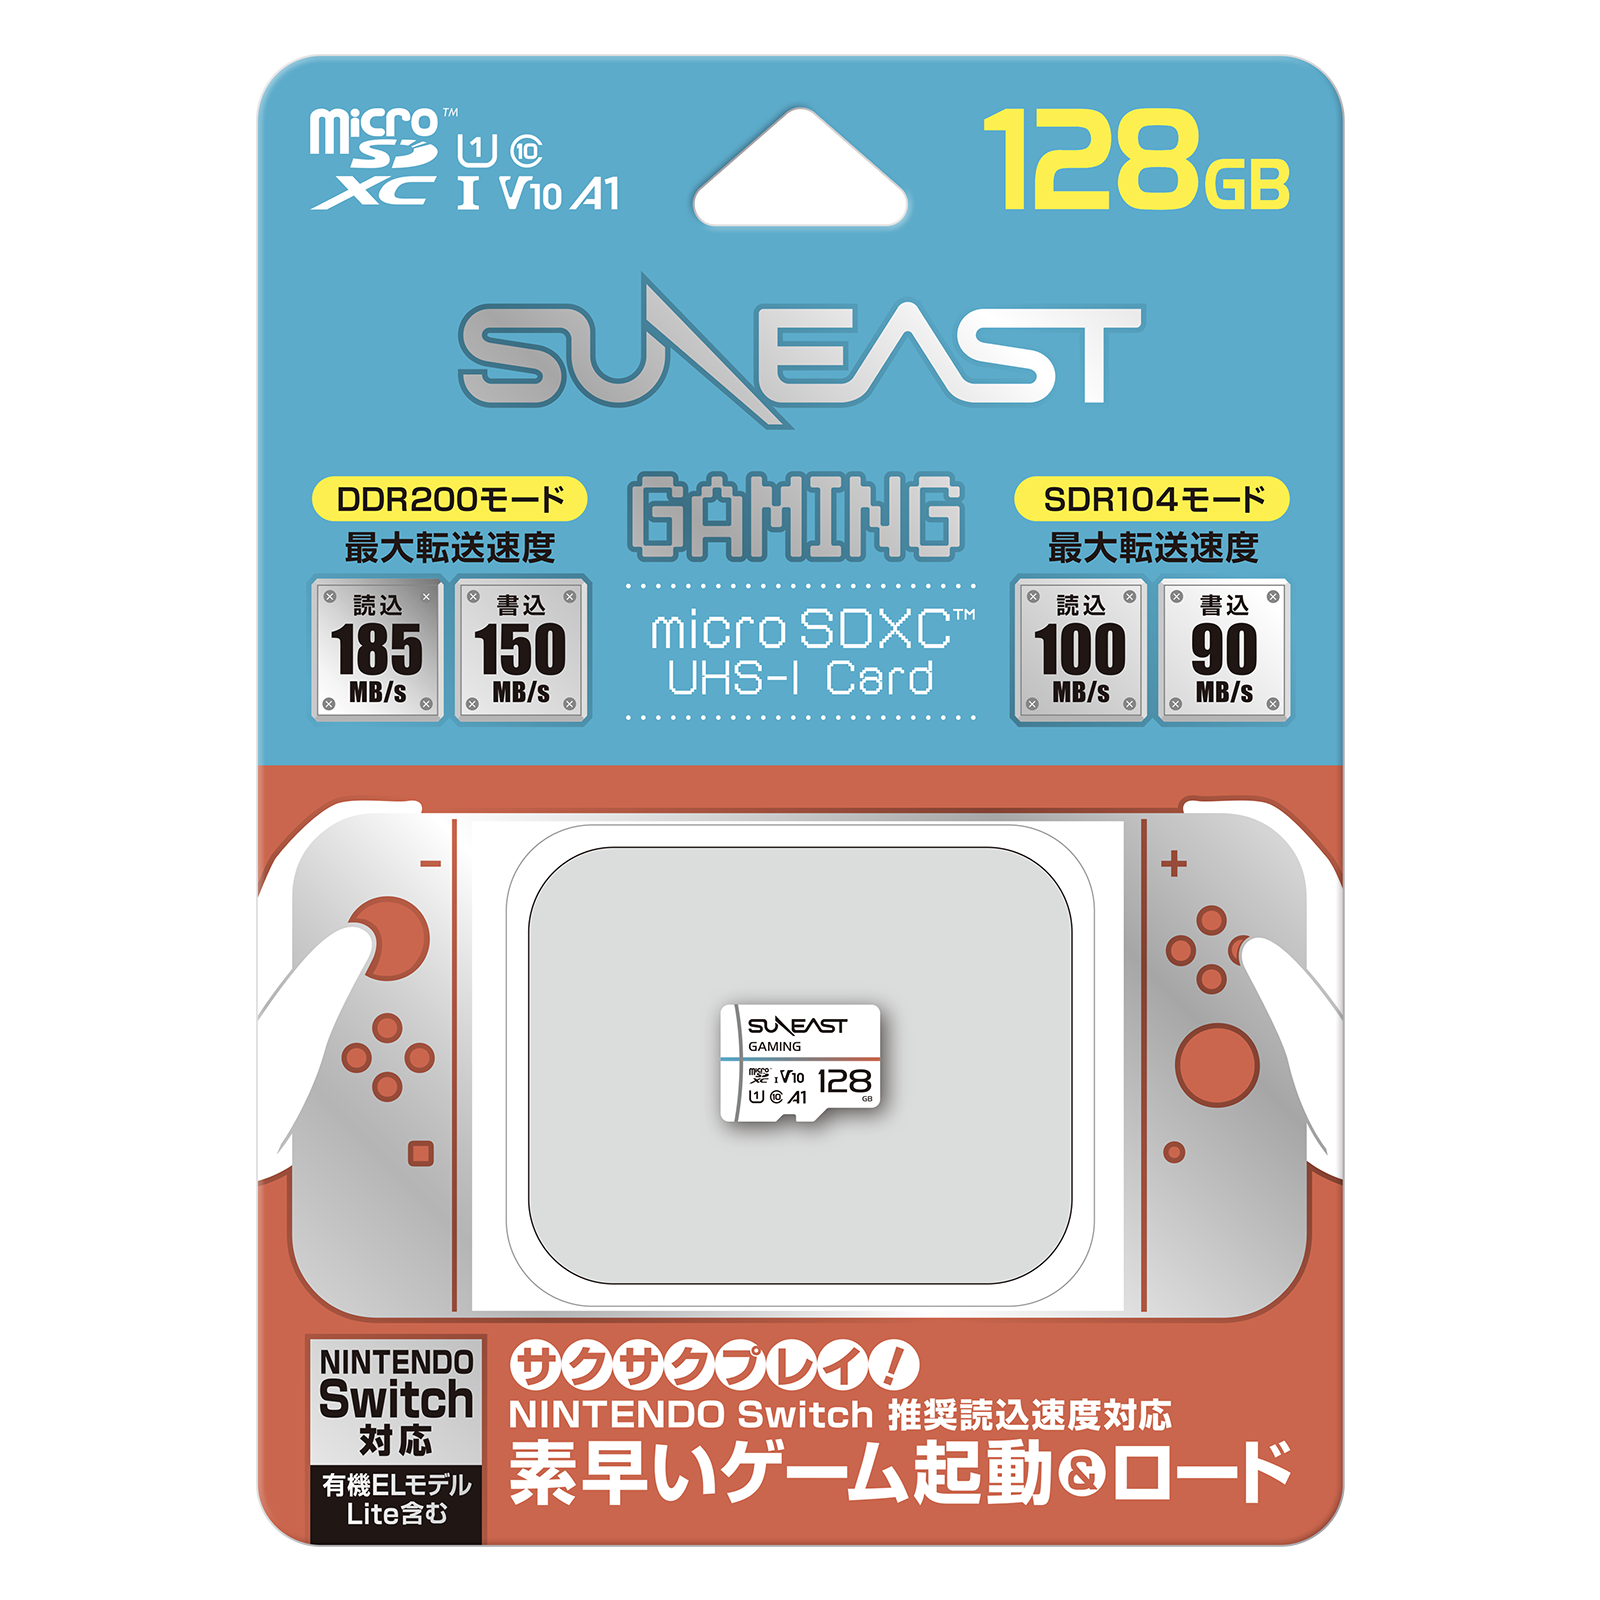 microSDXC UHS-I Card【GAMING】128GB Nintendo Switch 対応 - SUNEAST online store